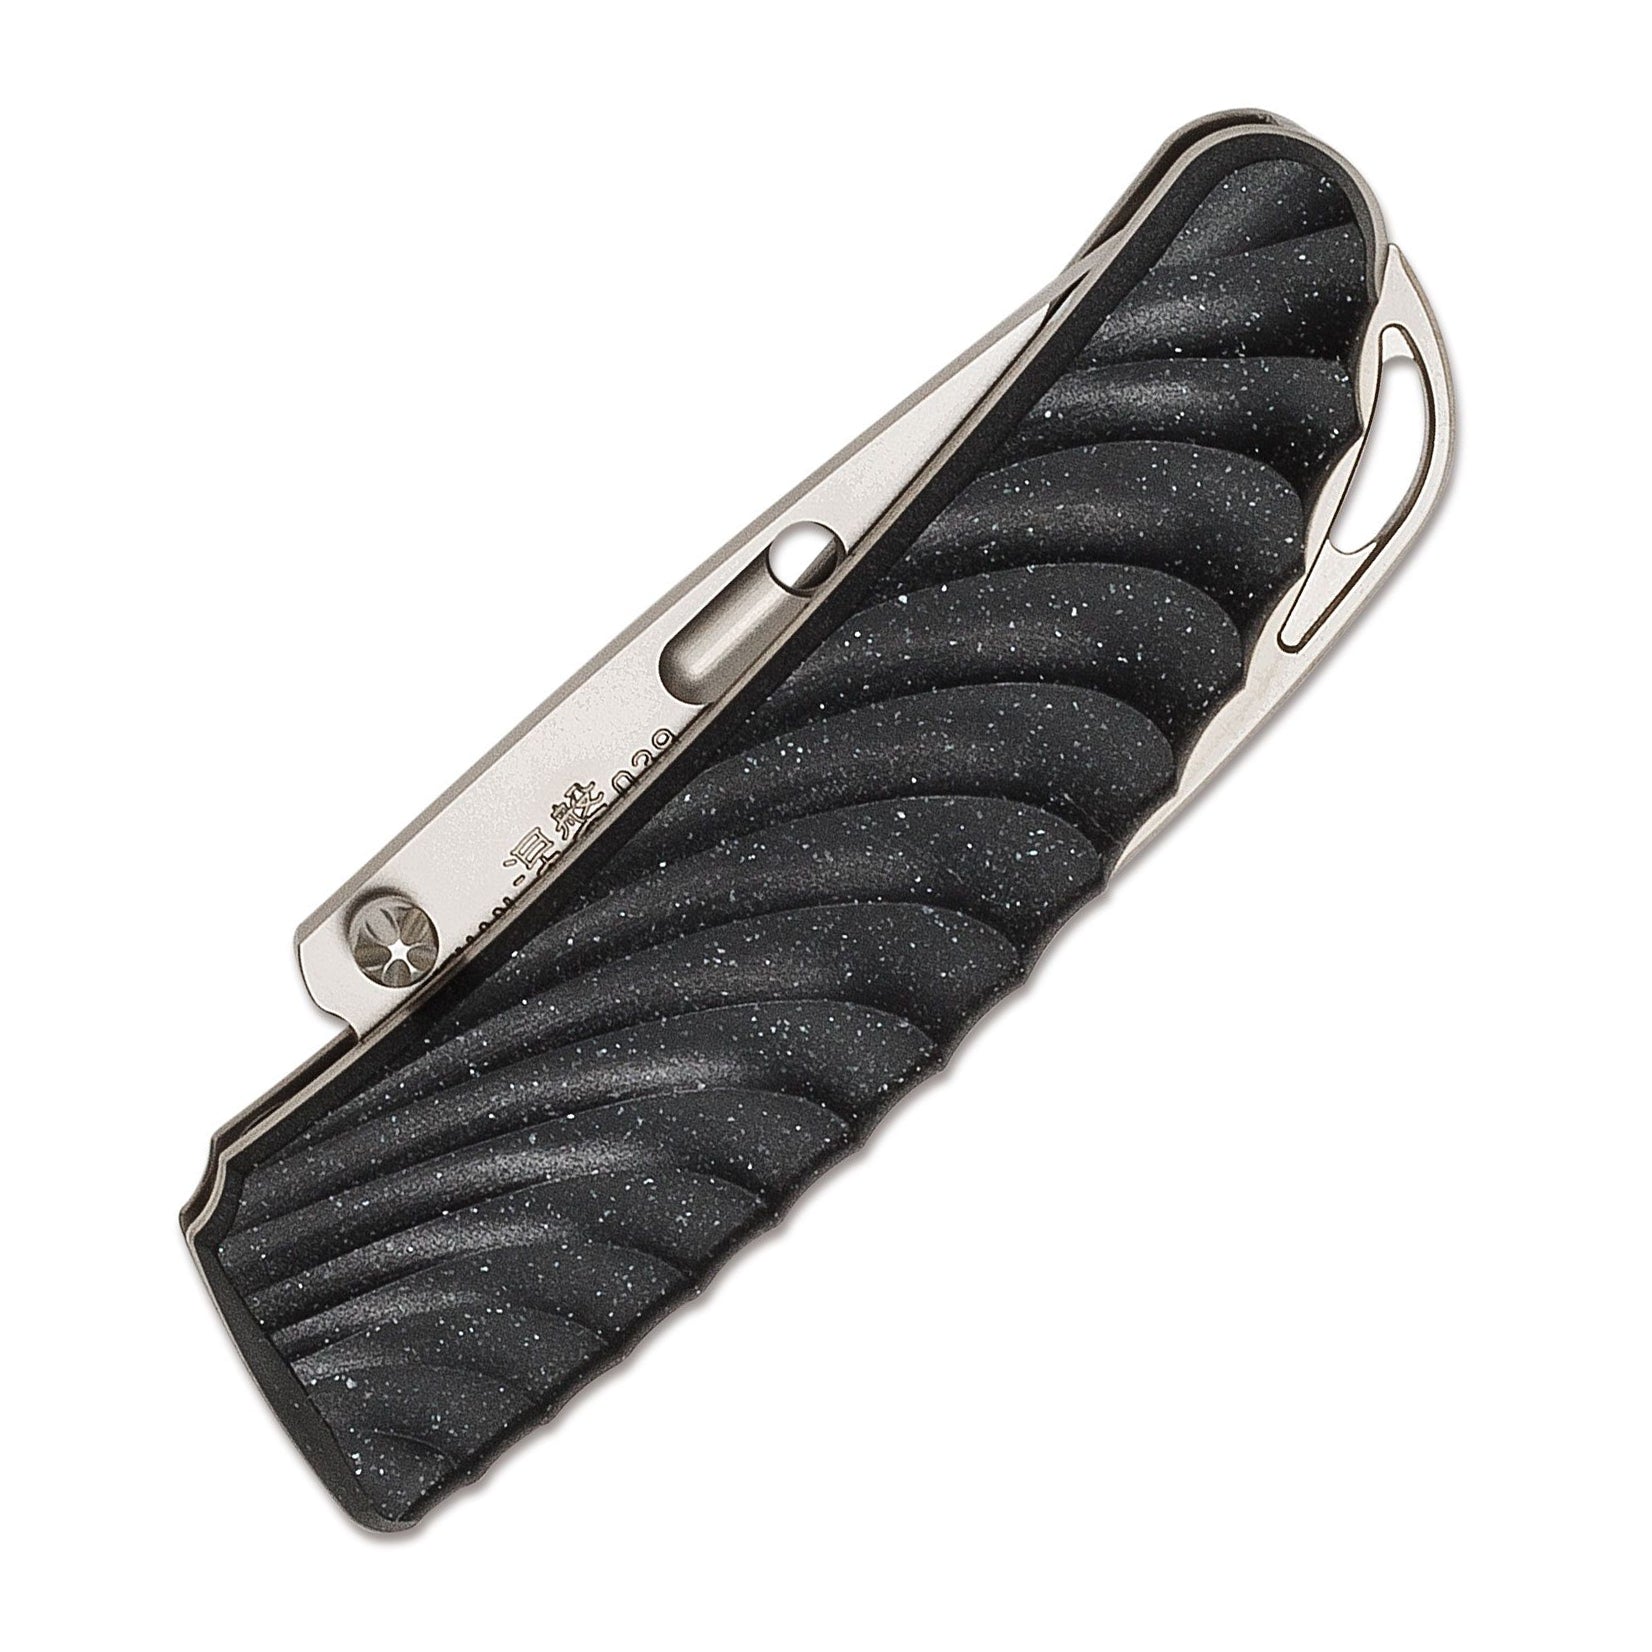 Rockstead 折叠刀 NEHAN-ZDP(MB) ZDP-189 刀片钛合金手柄刀具收藏按钮锁